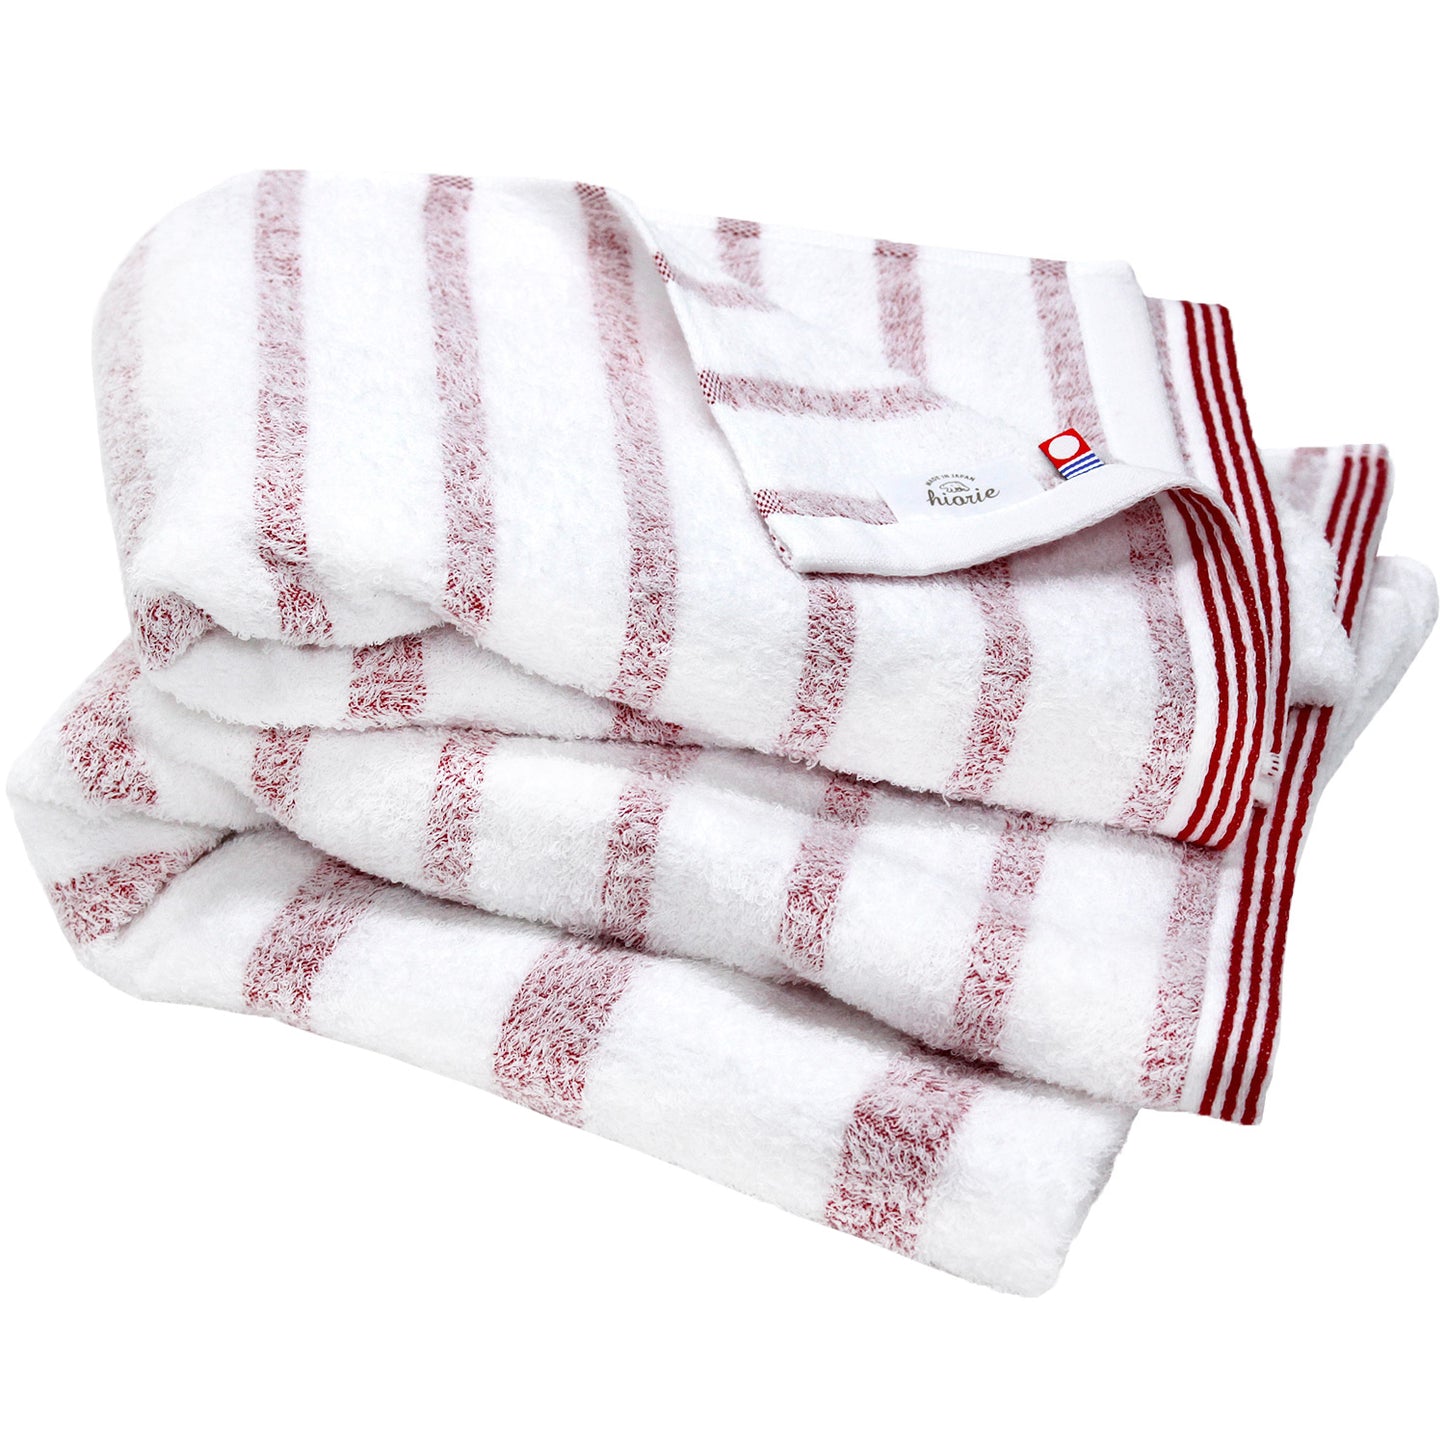 Imabari - Bath Towel Cotton "Mist" 2-Pack